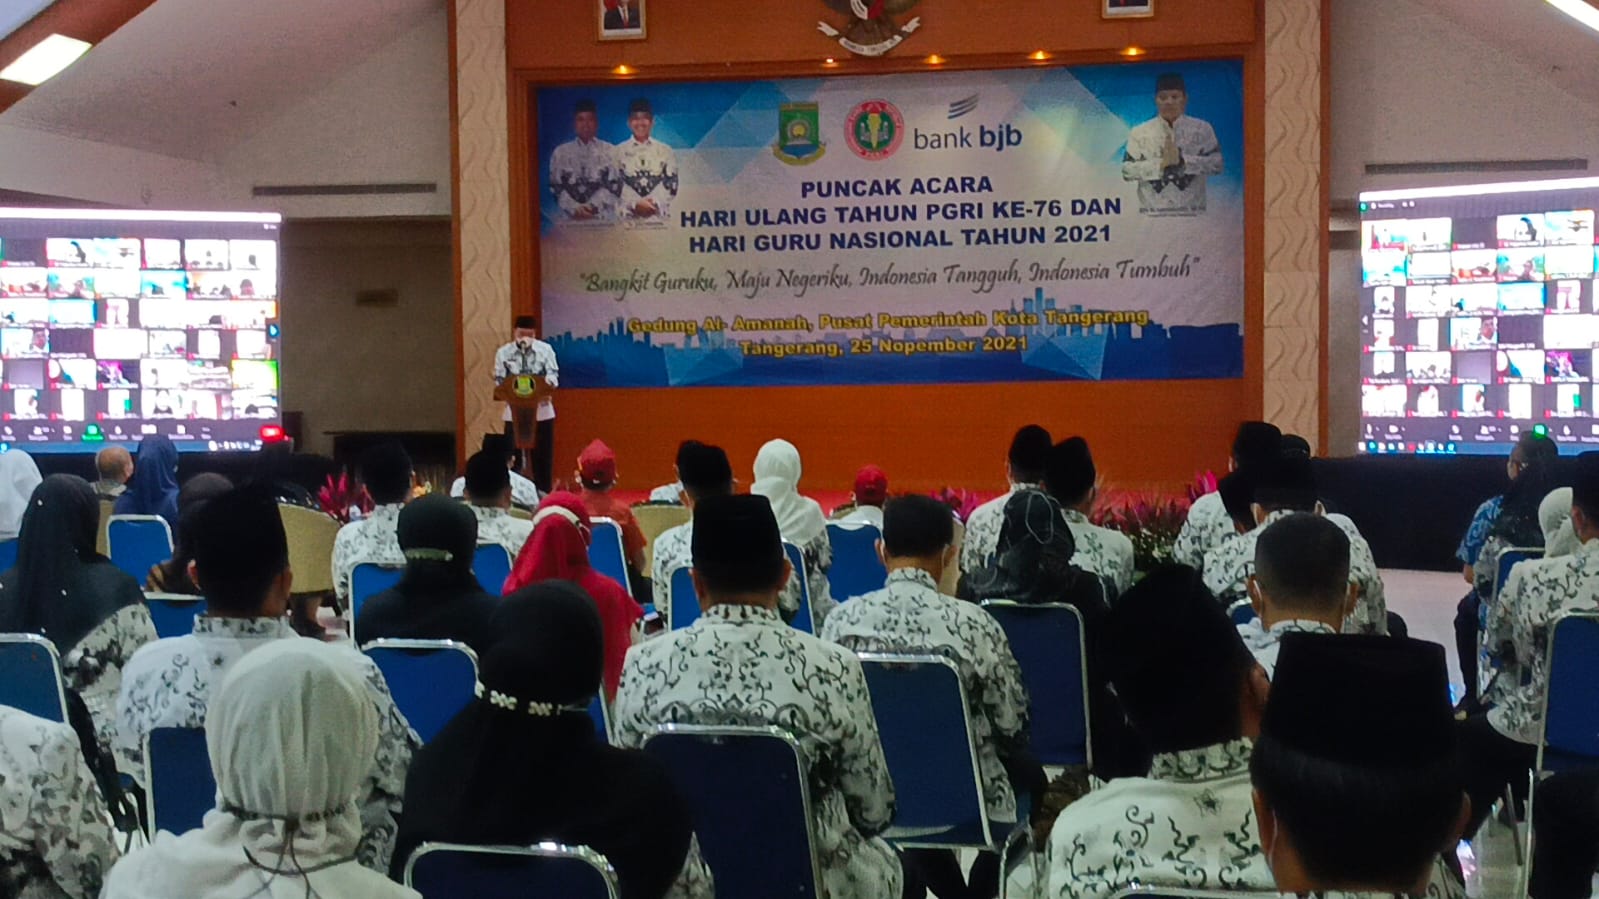 Pemerintah Kota Tangerang melalui Dinas Pendidikan menggelar puncak acara dalam rangka peringatan Hari Guru Nasional dan HUT PGRI tahun 2021.